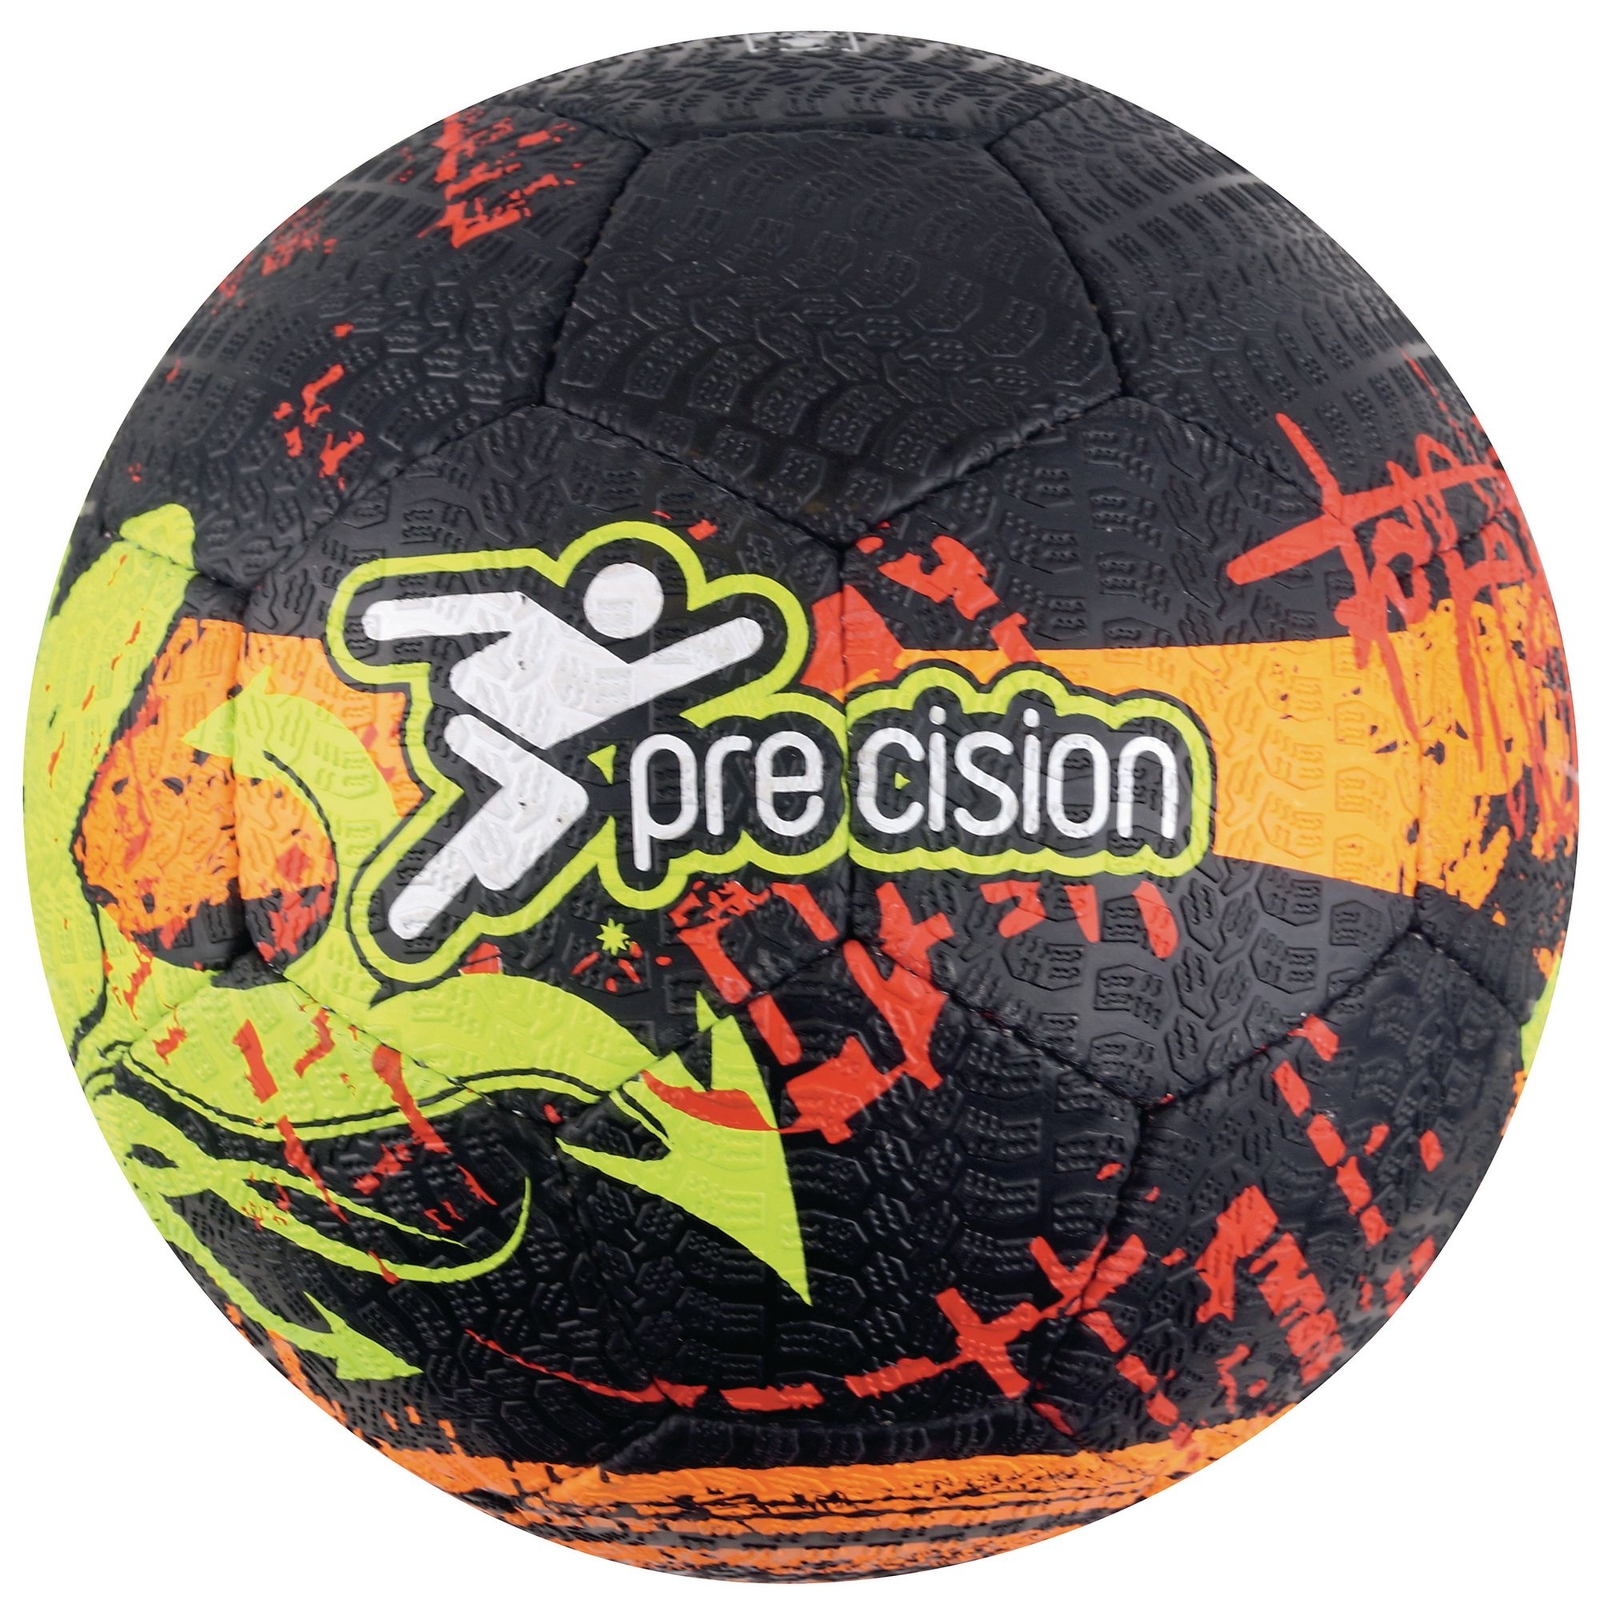 Precision Street Mania Ball - Size 5 - Fluo Yellow/Black